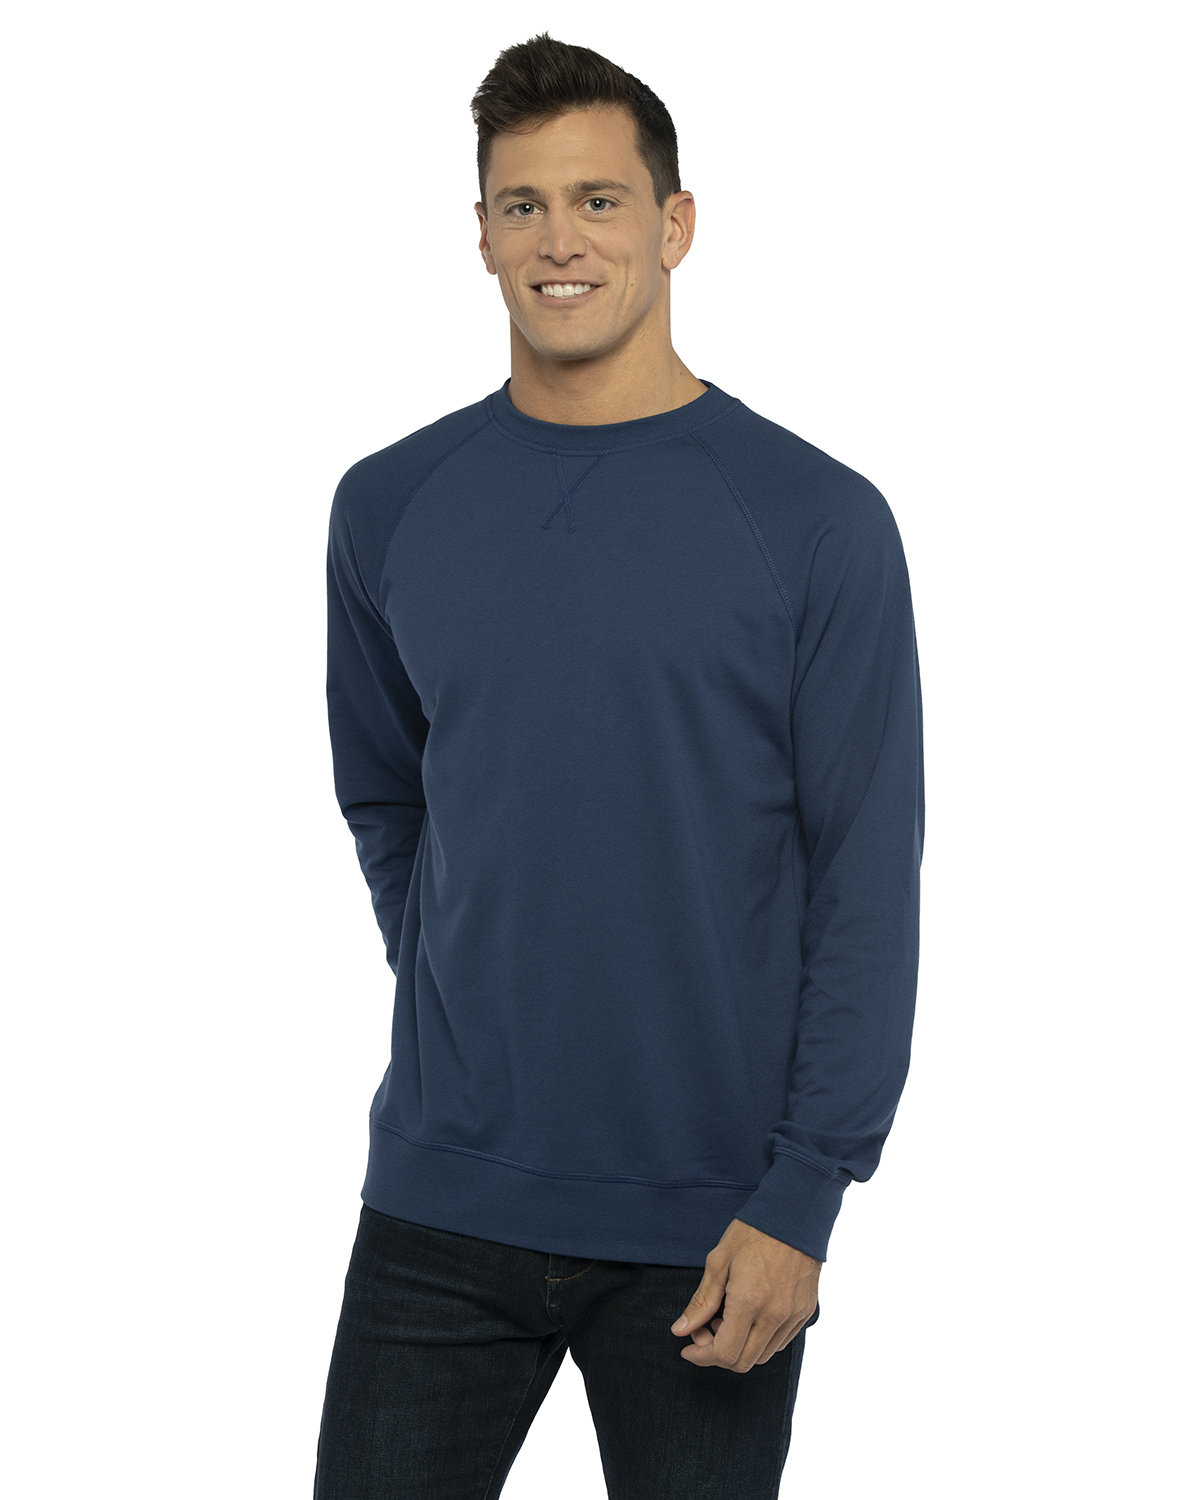 Next Level Unisex Laguna French Terry Raglan Sweatshirt COOL BLUE 